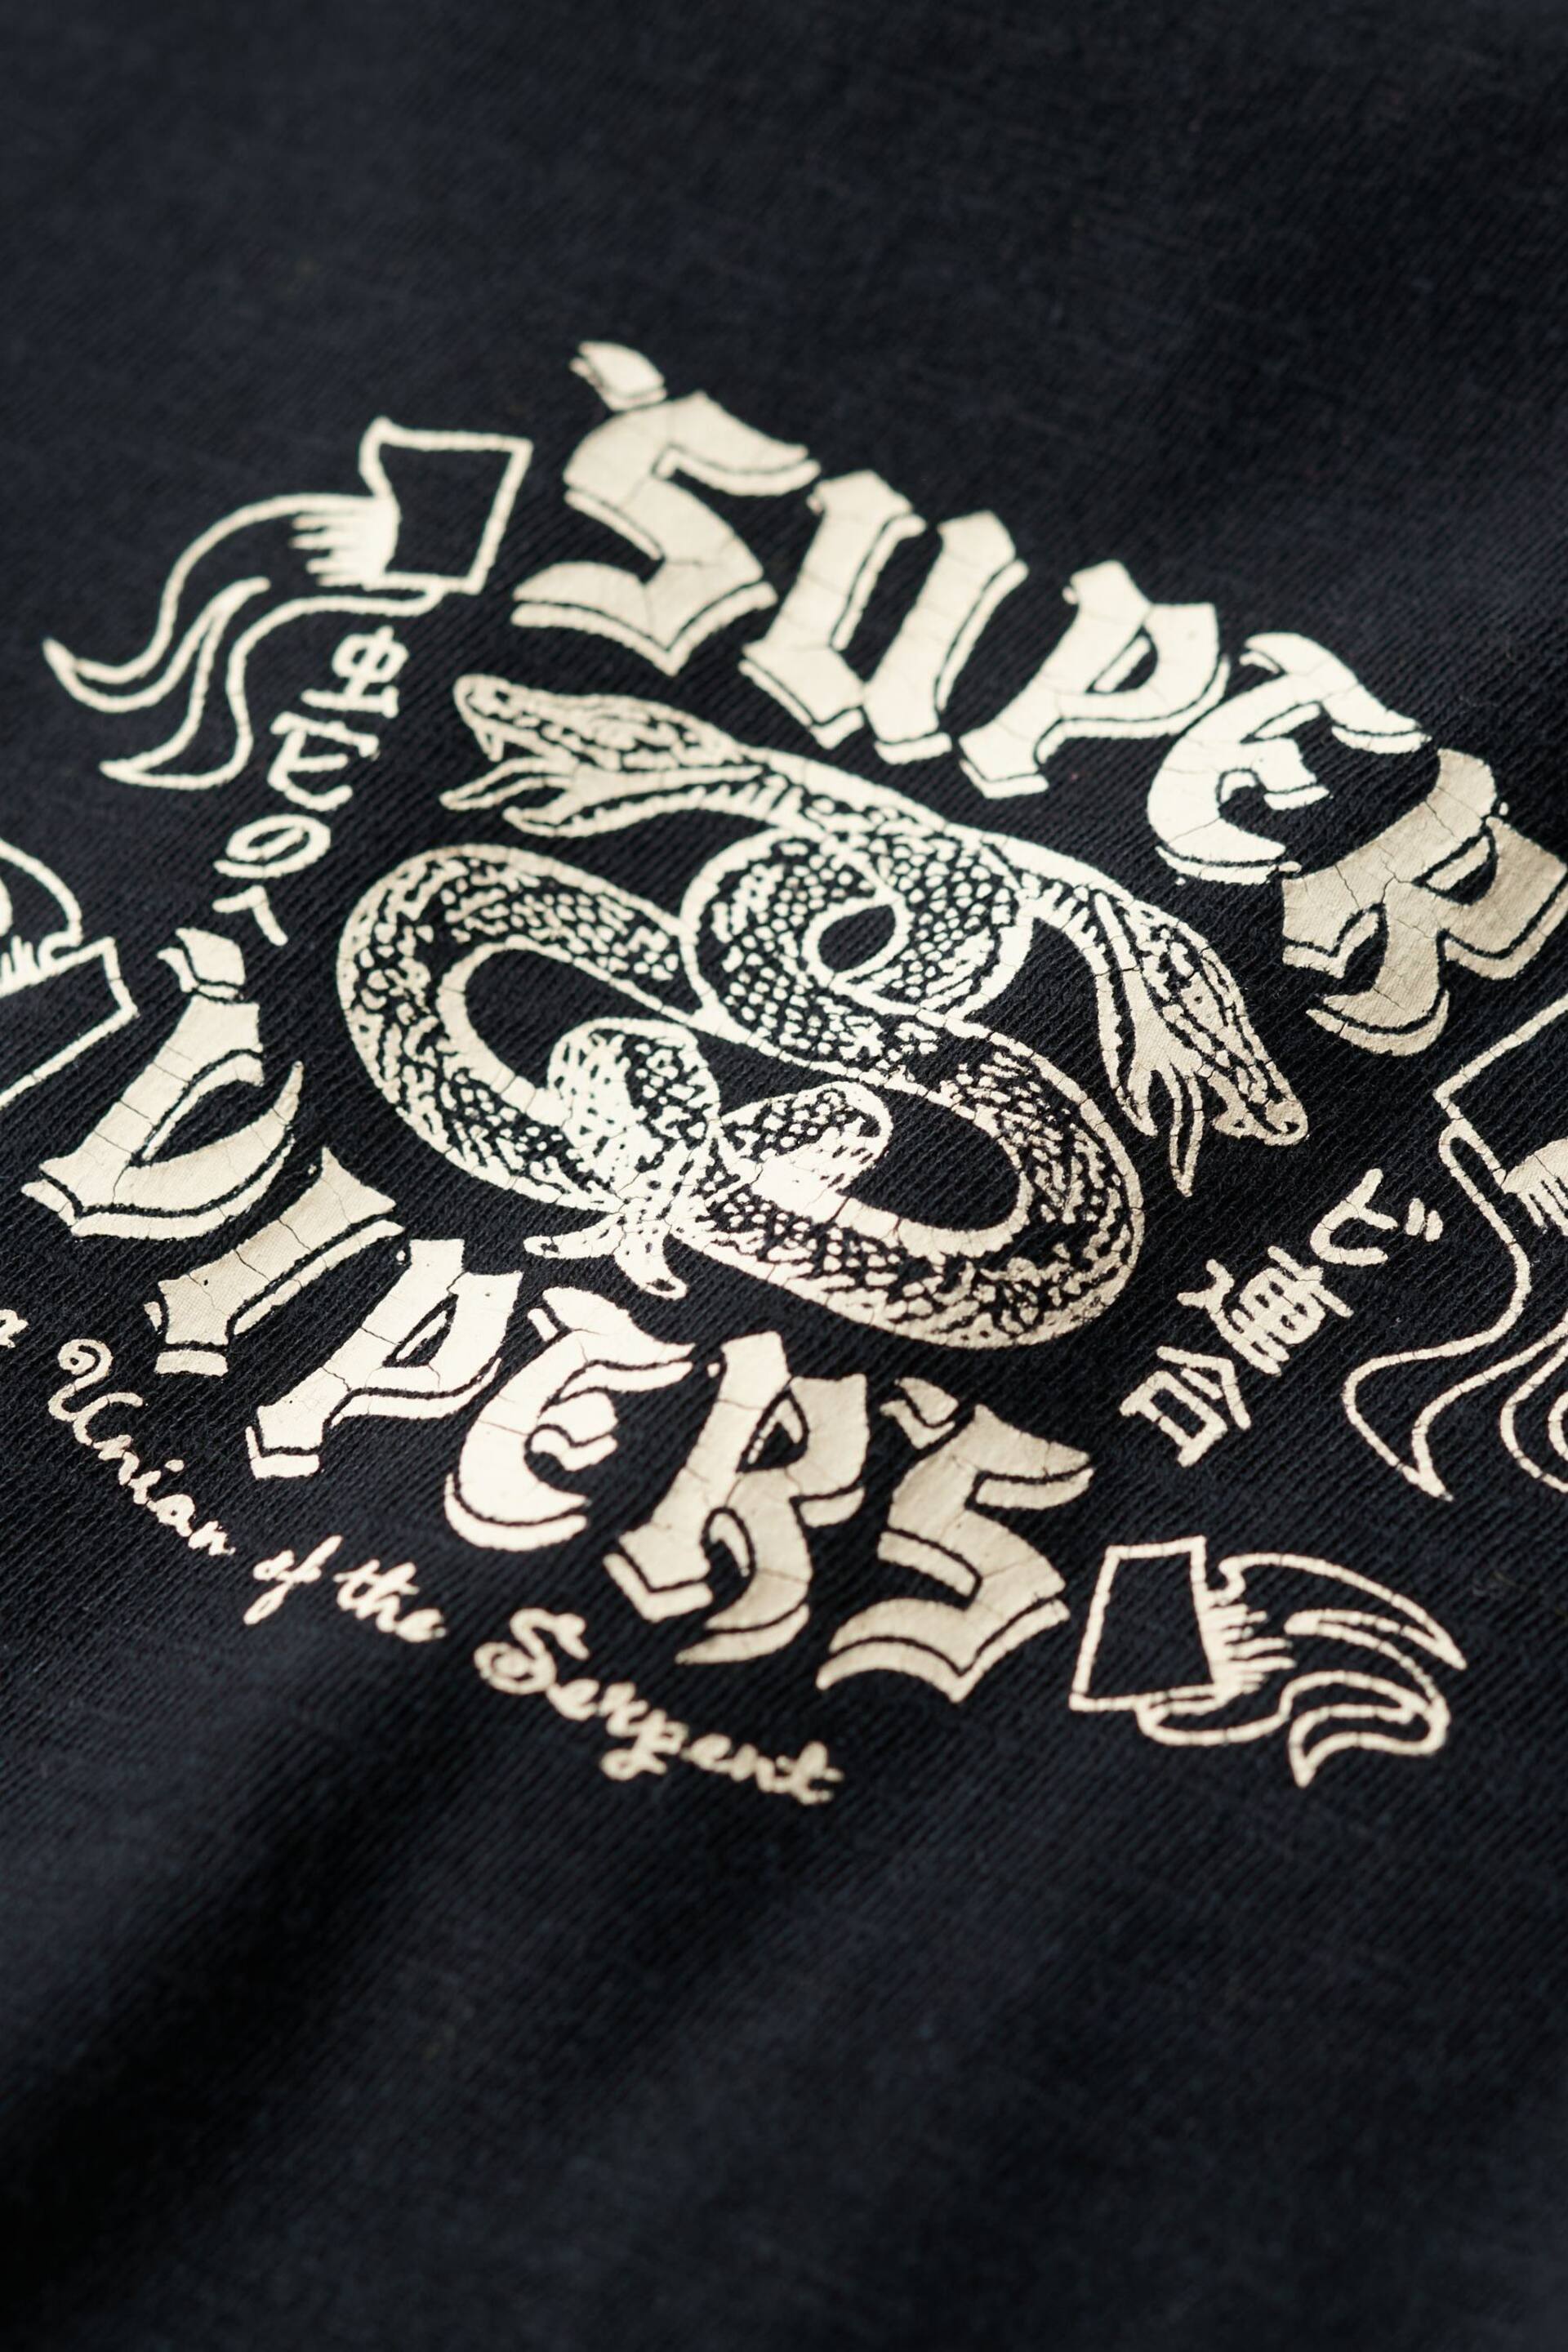 Superdry Black Retro Rocker Graphic T-Shirt - Image 8 of 8